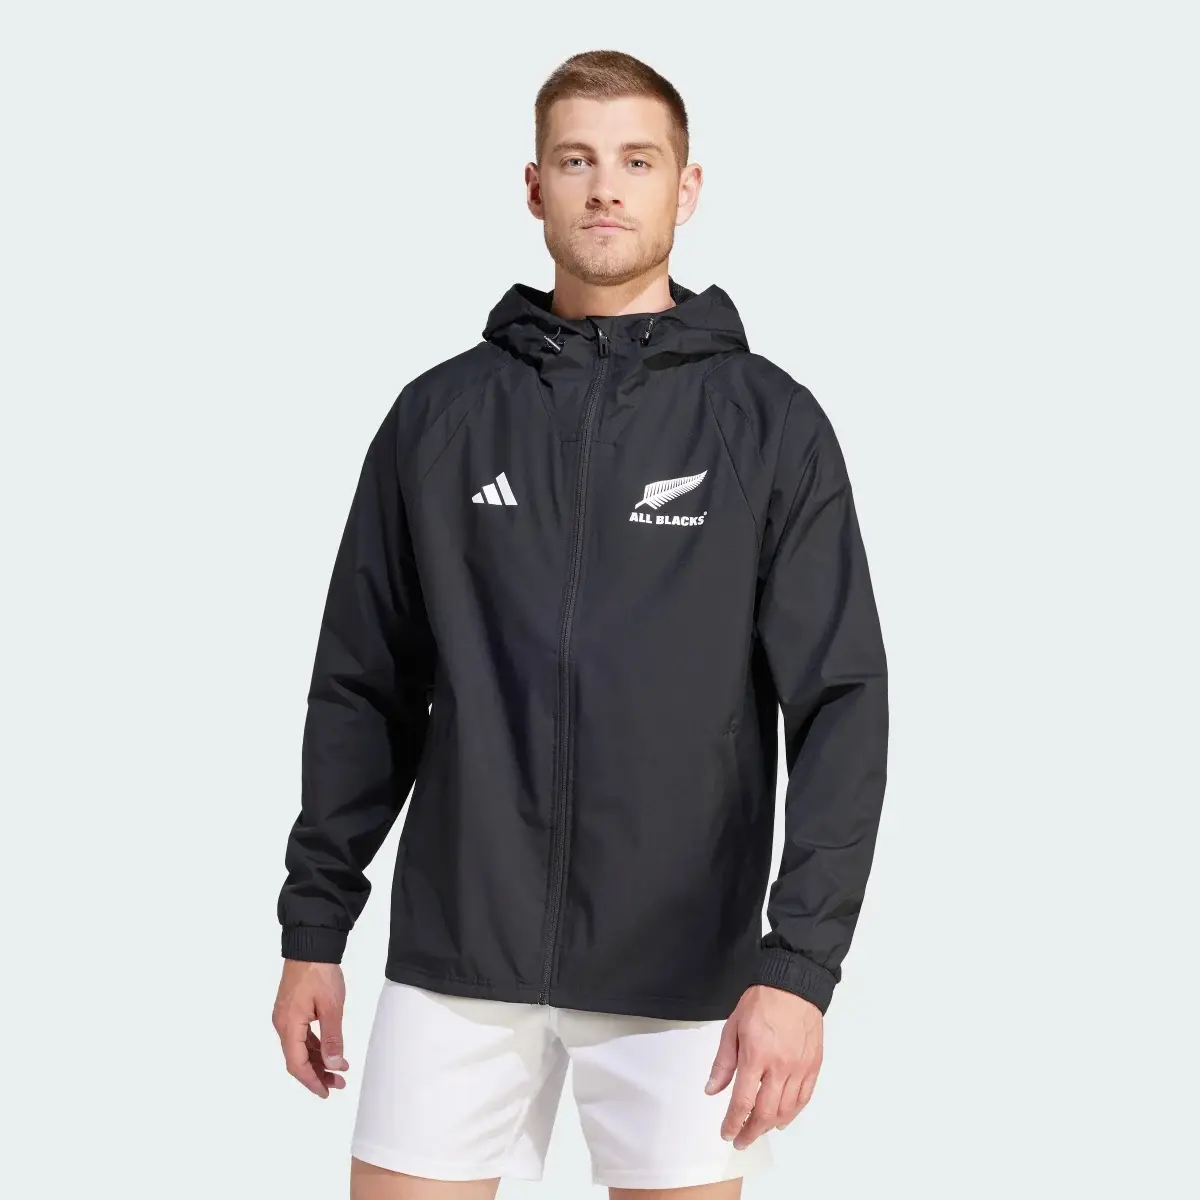 Adidas All Blacks Rugby Wind Jacket. 2